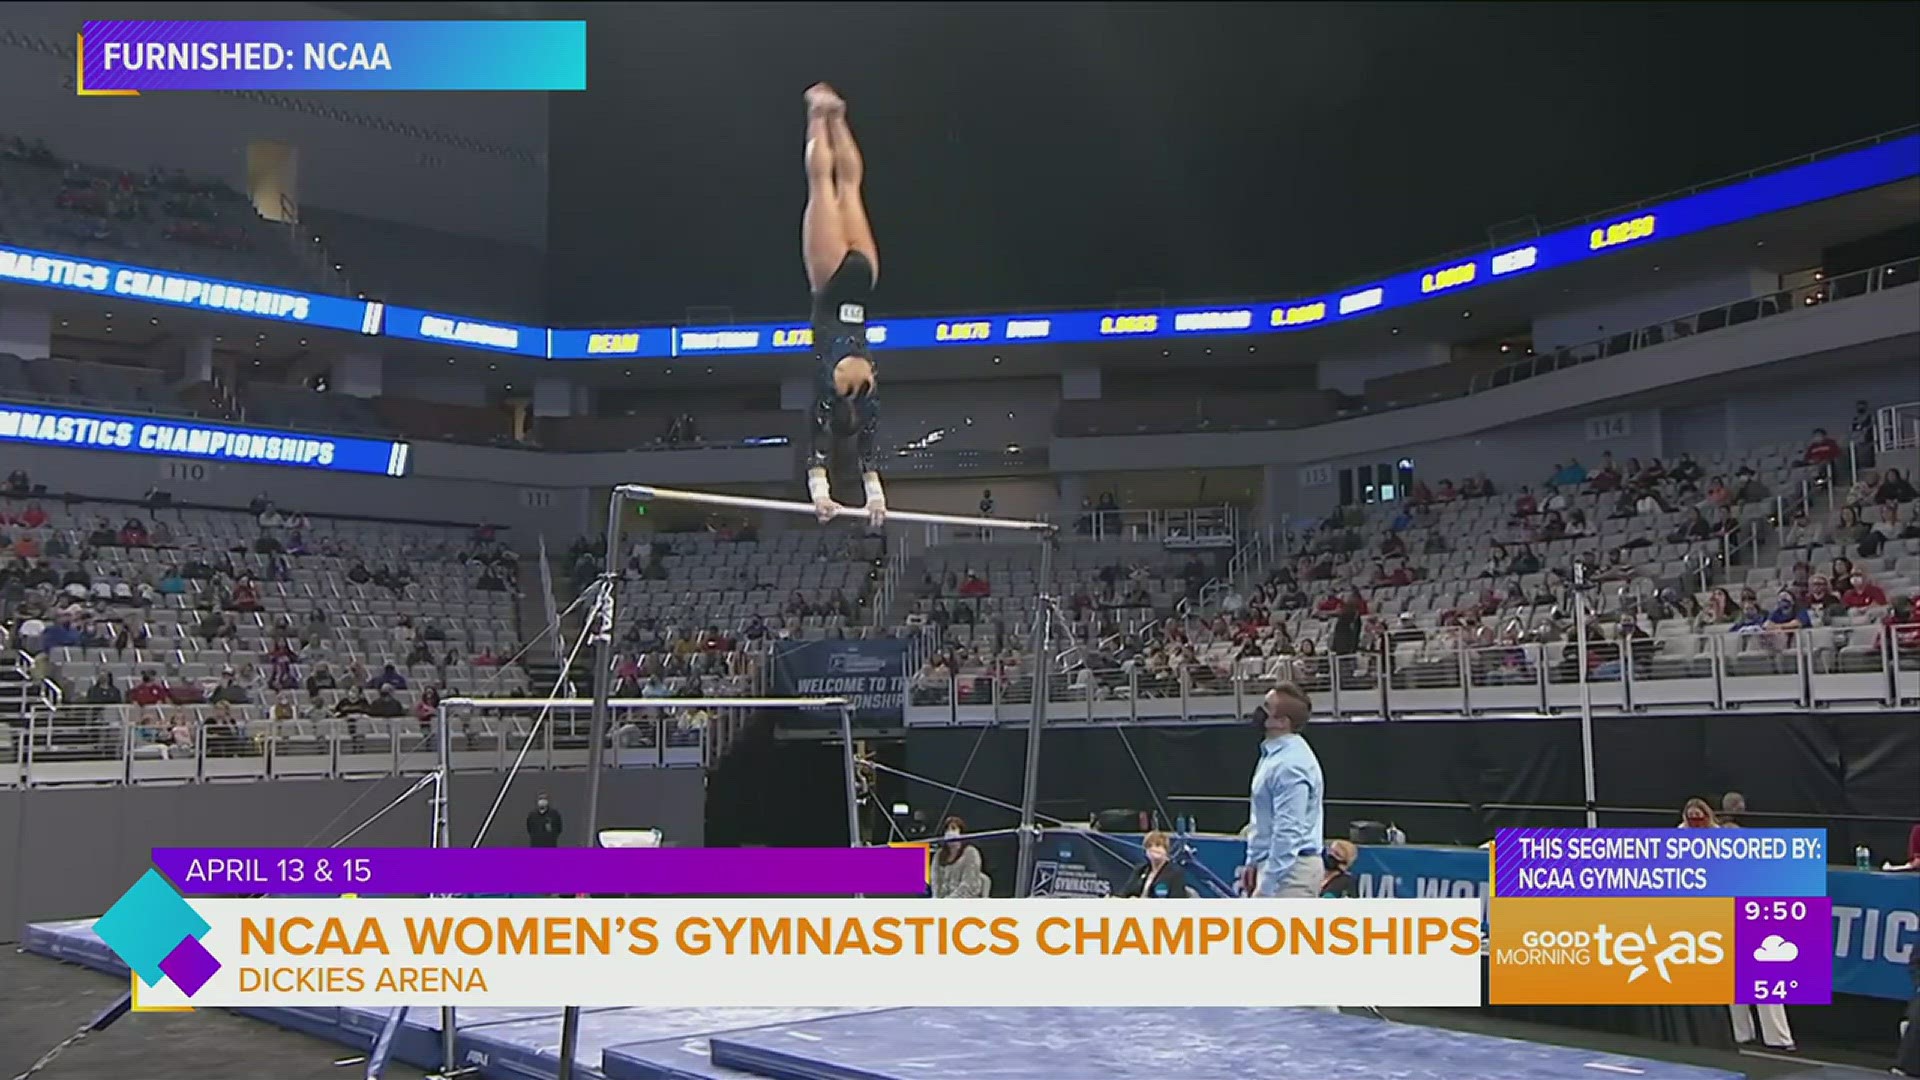 This segment is sponsored by NCAA Gymnastics.